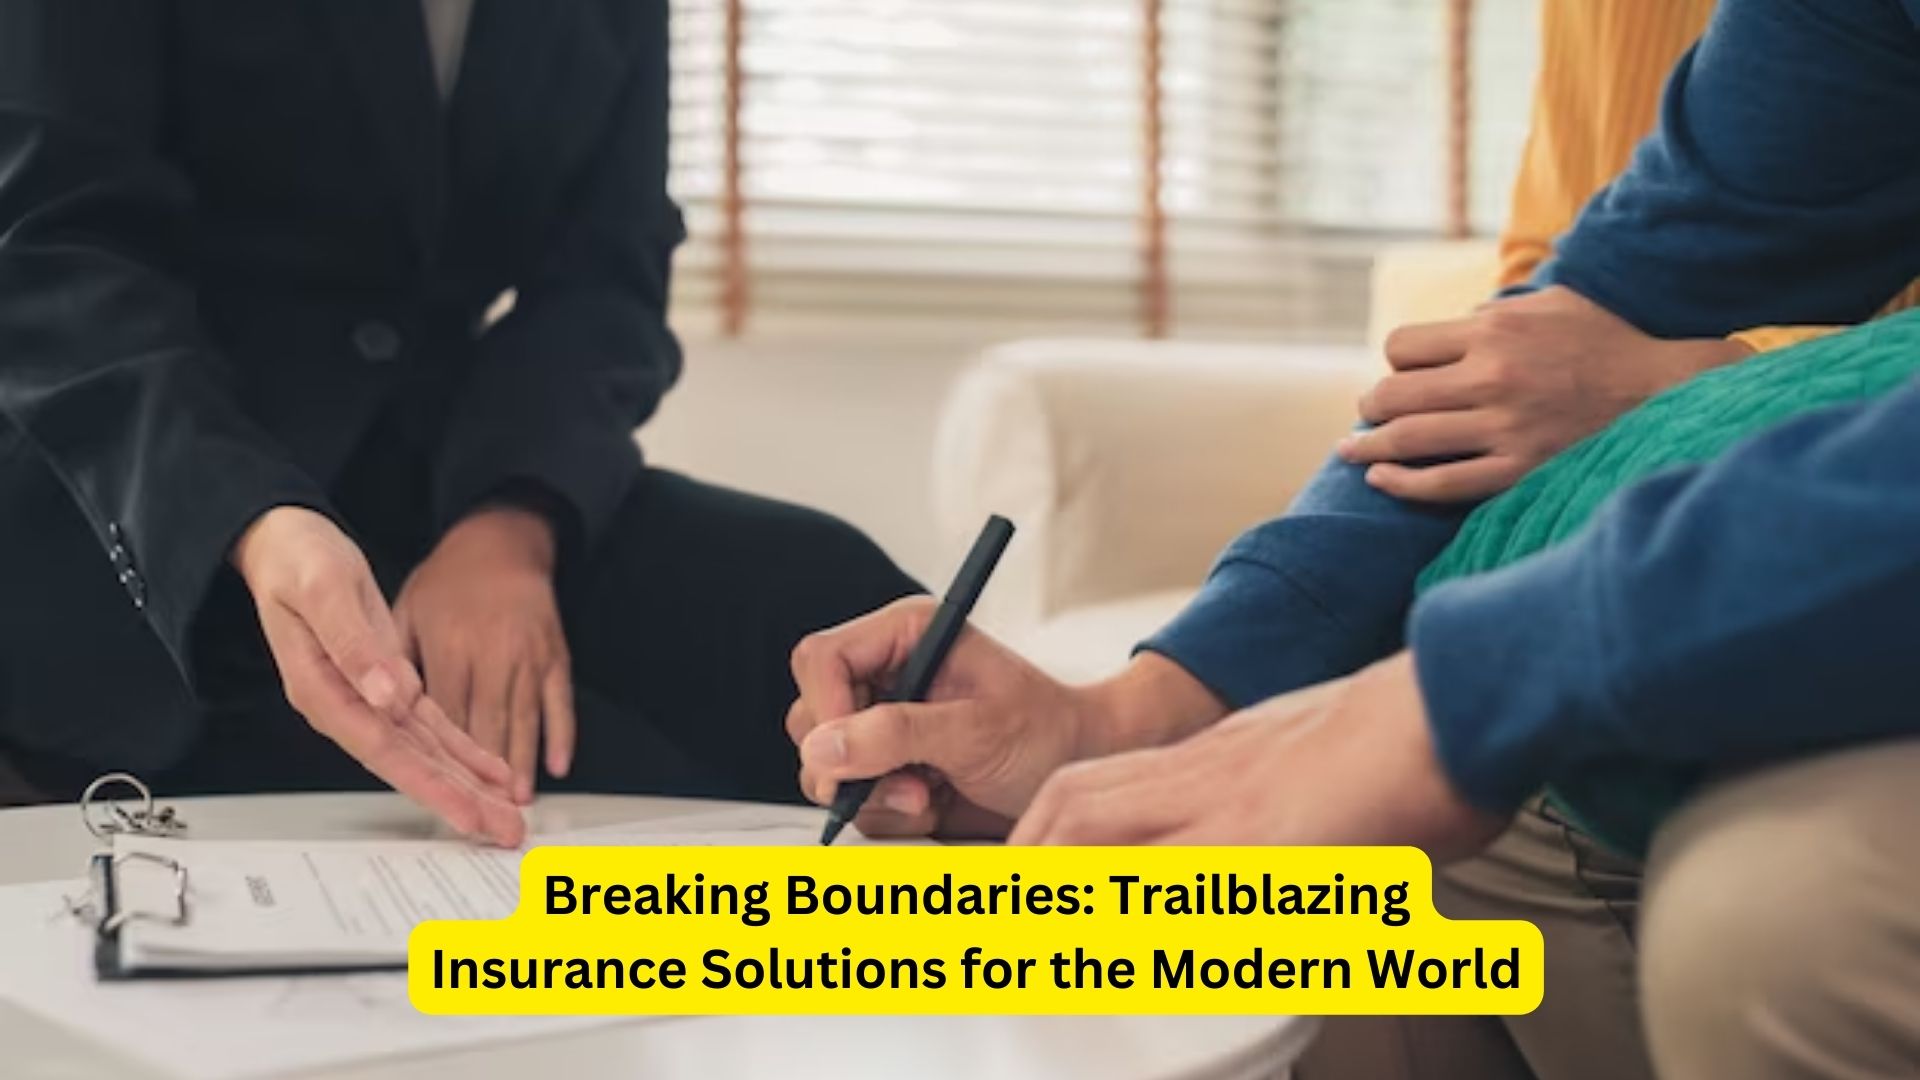 Breaking Boundaries: Trailblazing Insurance Solutions for the Modern World